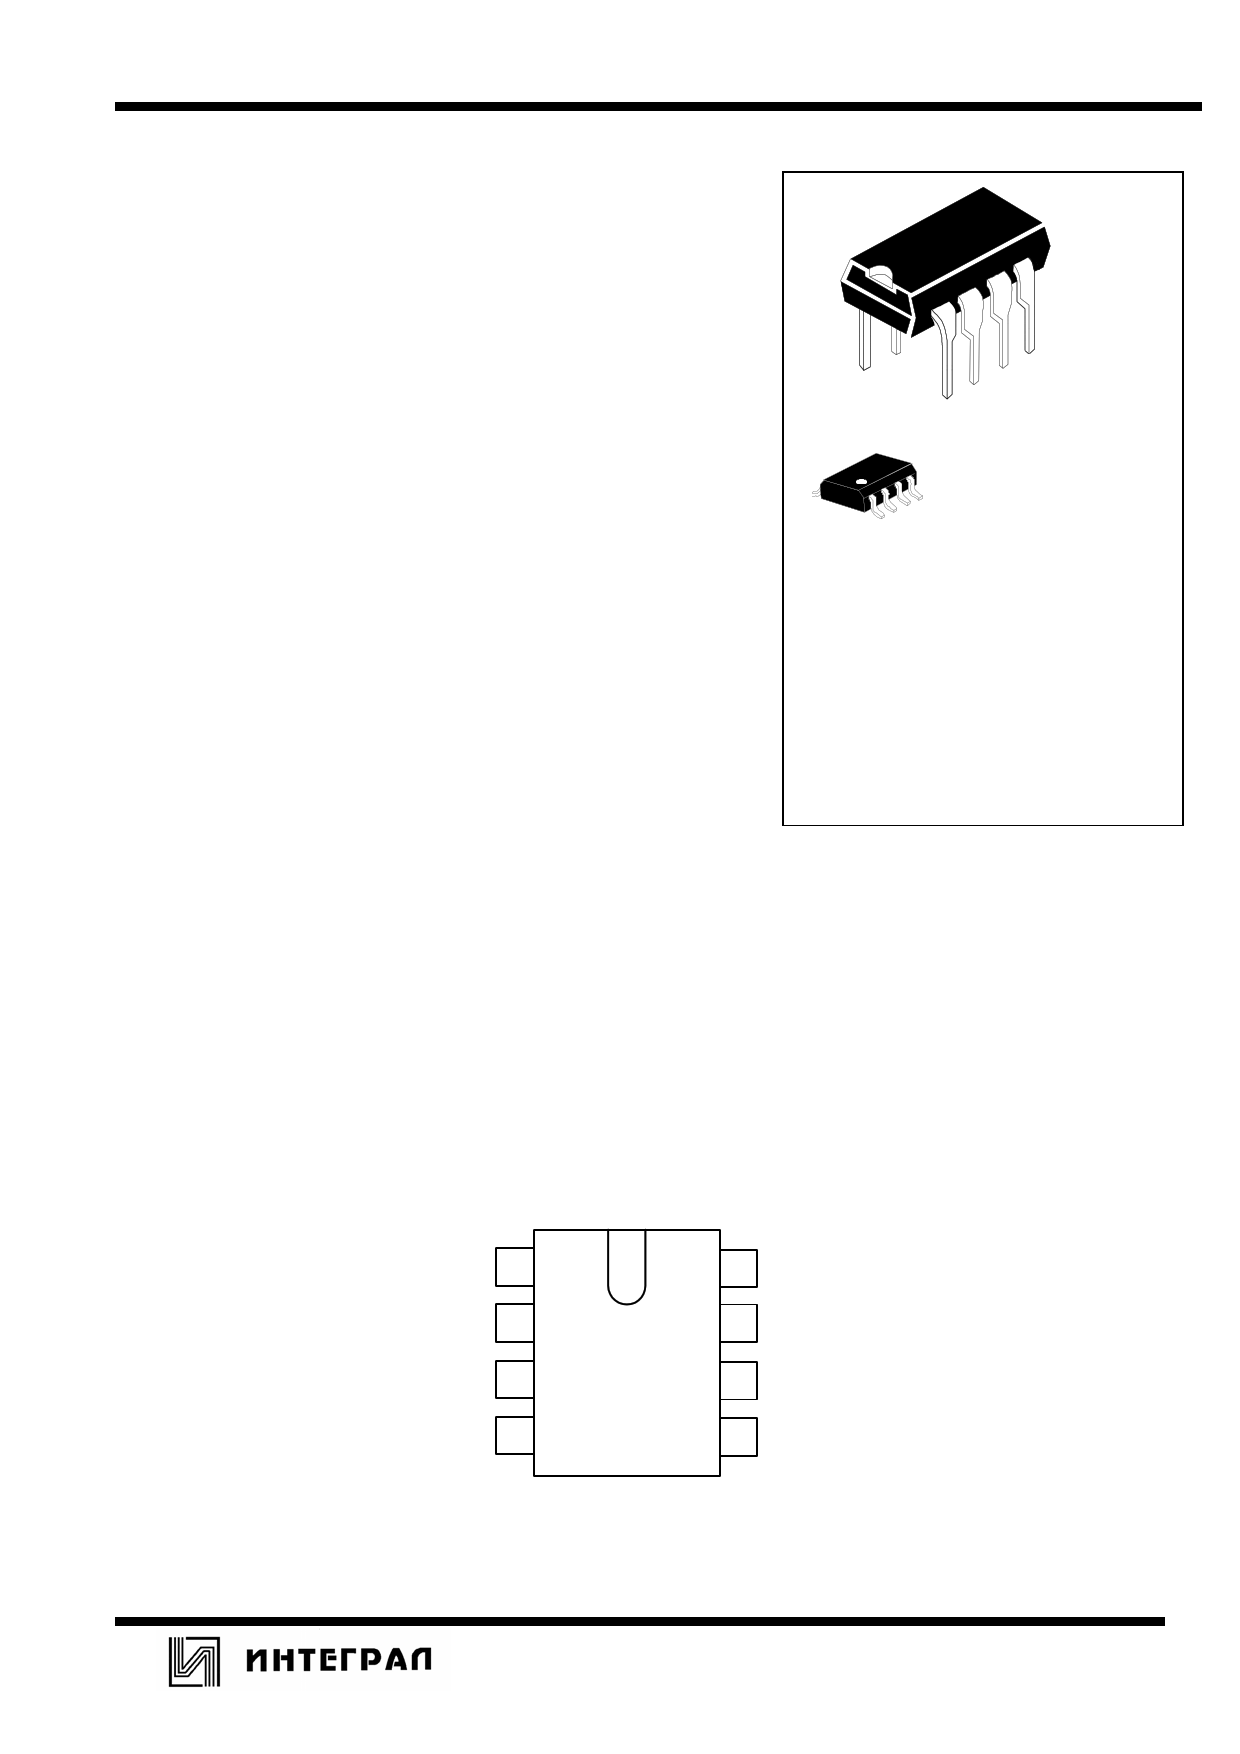 Кт819 характеристики транзистора, datasheet, цоколевка и аналоги